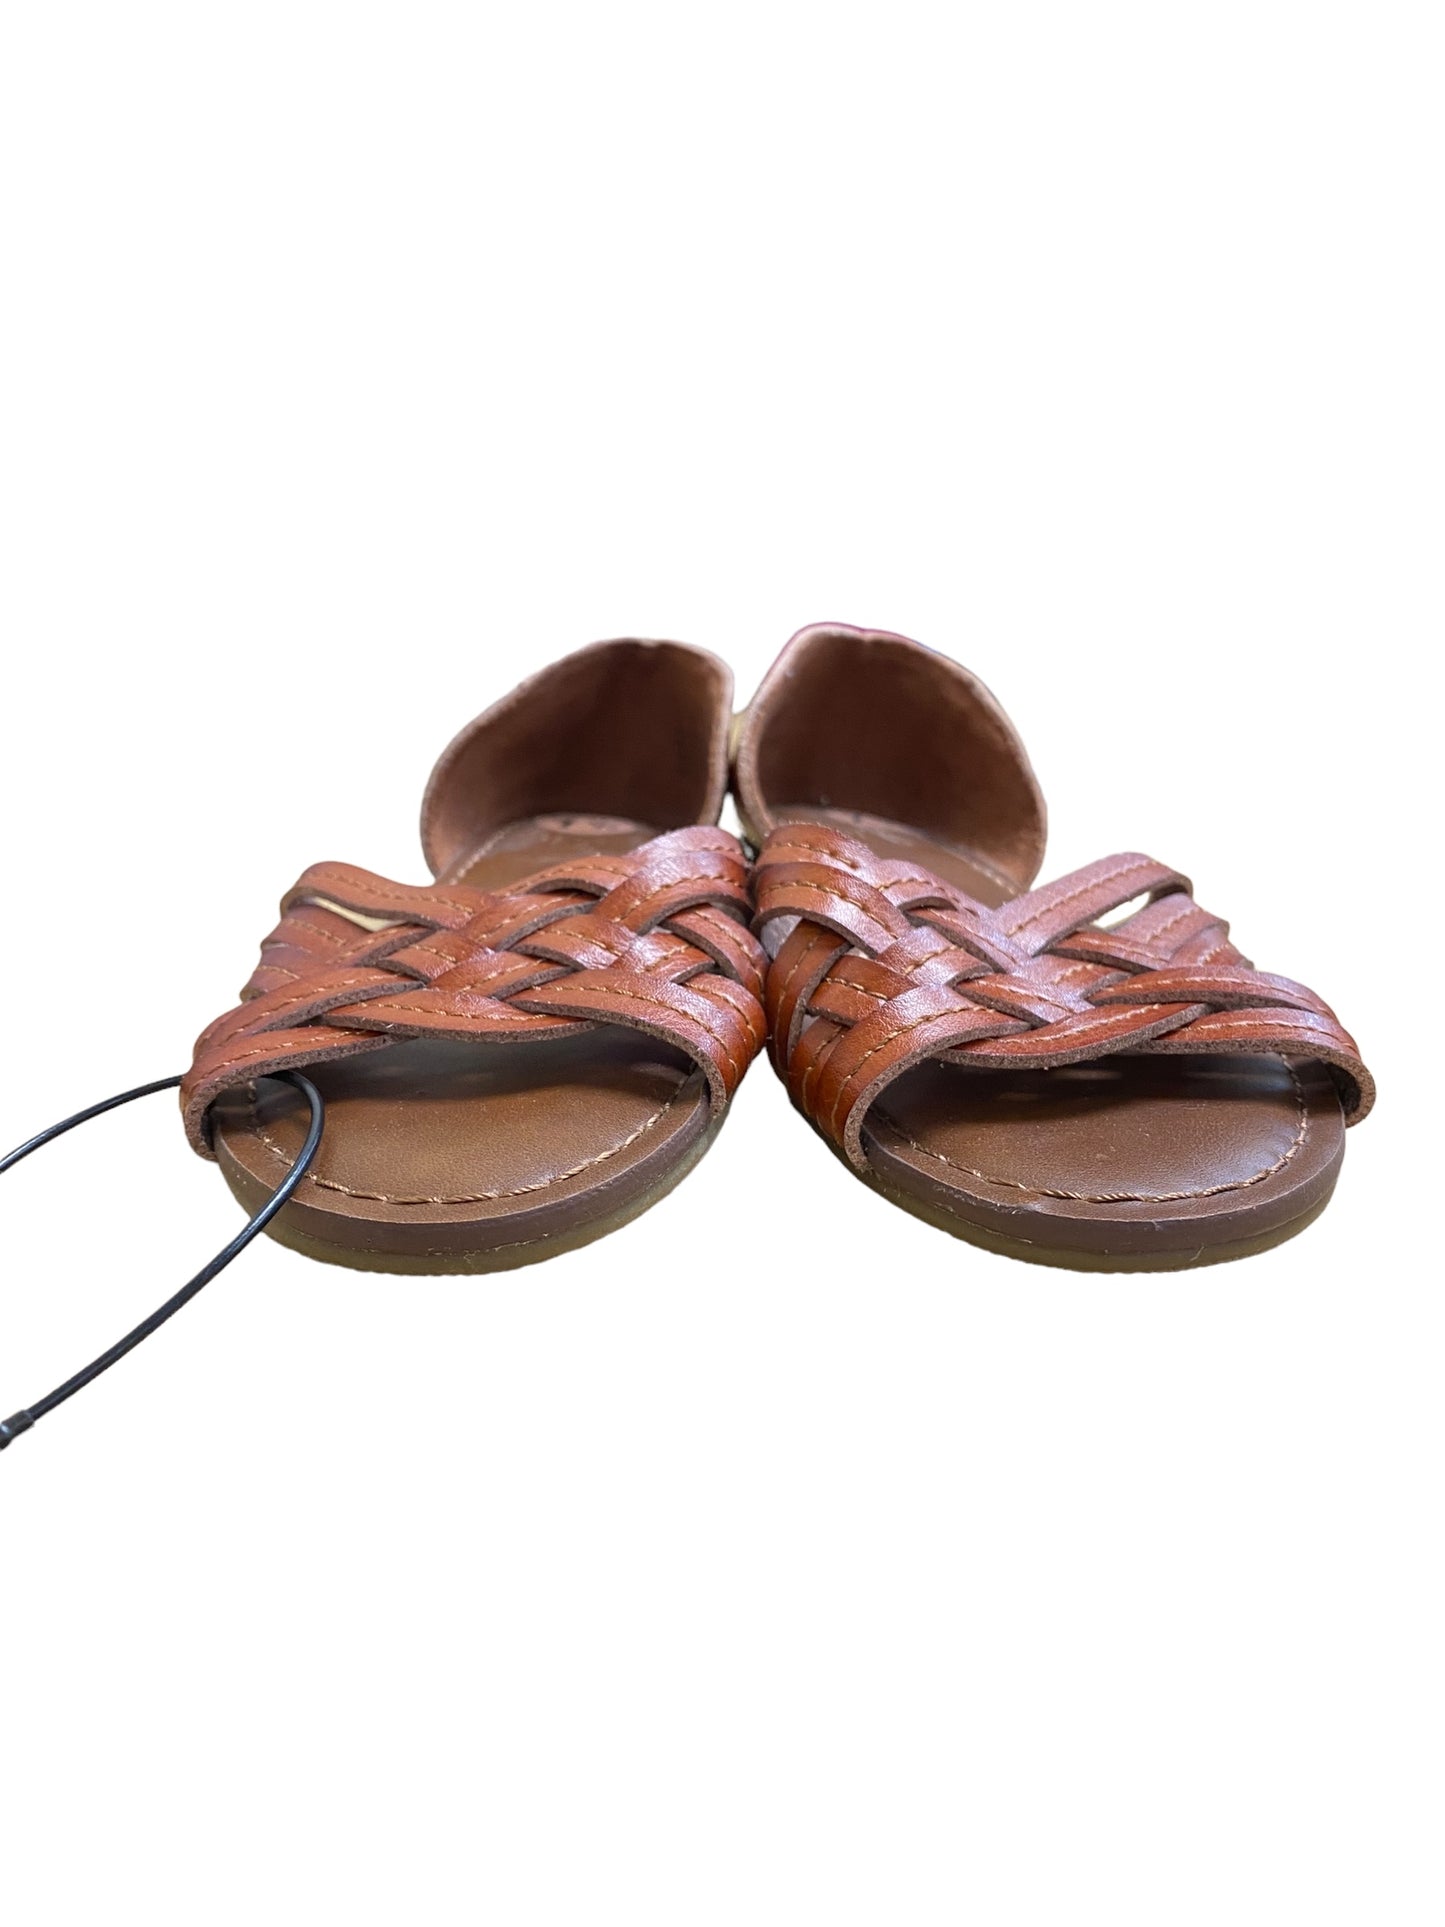 Sandals Flip Flops By Universal Thread  Size: 7.5